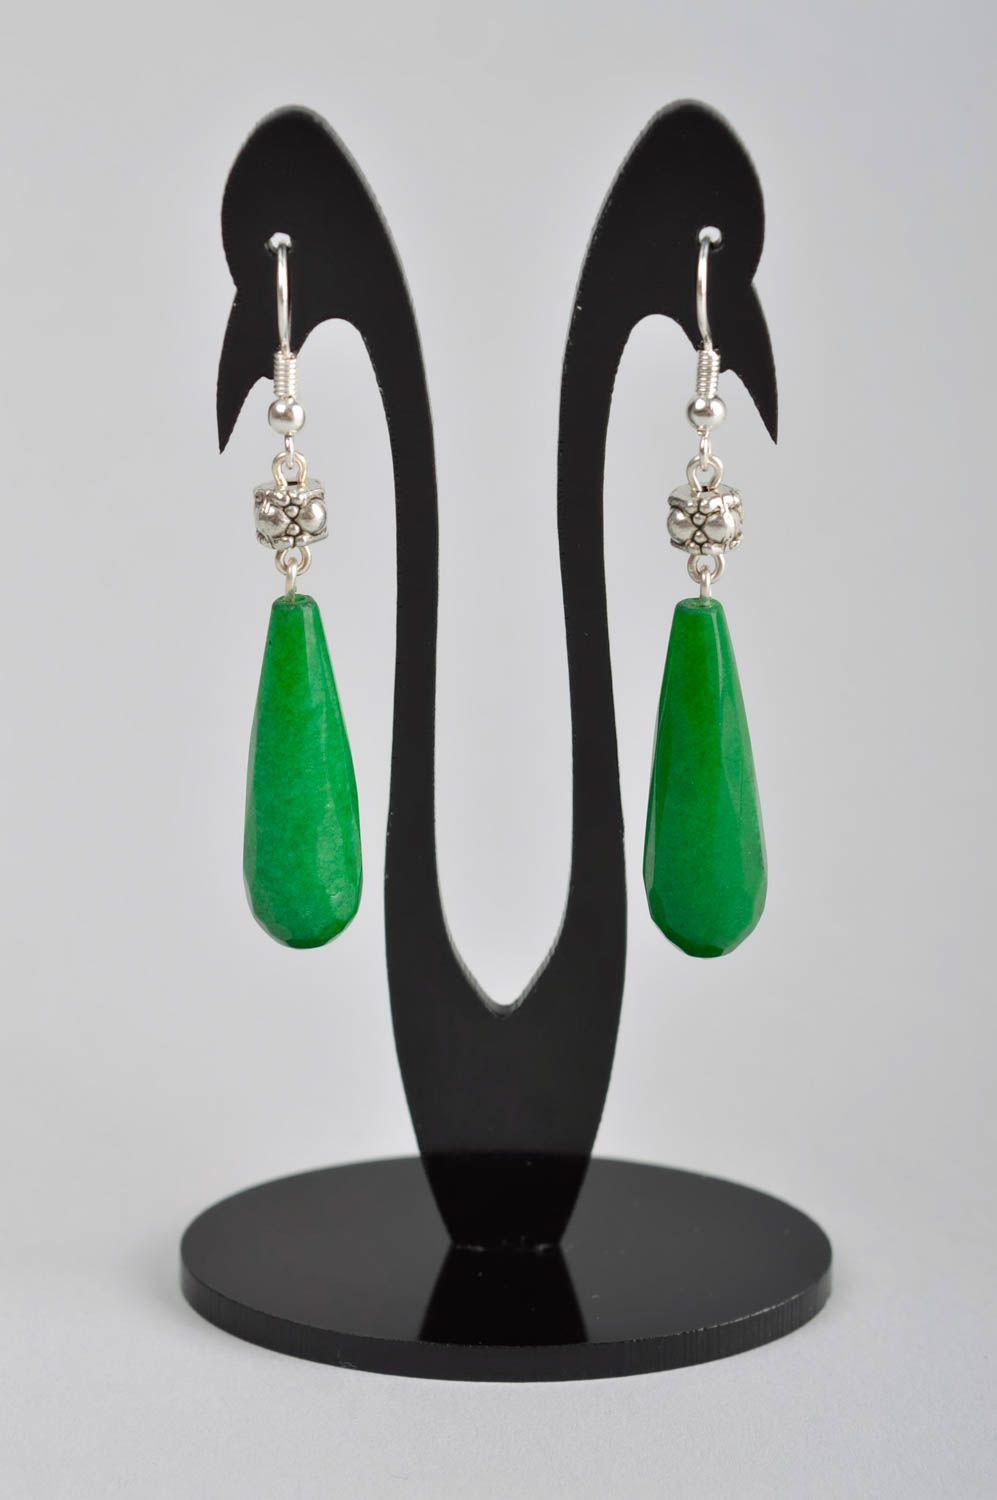 Handmade gemstone earrings bead earrings artisan jewelry designs gifts for her photo 2